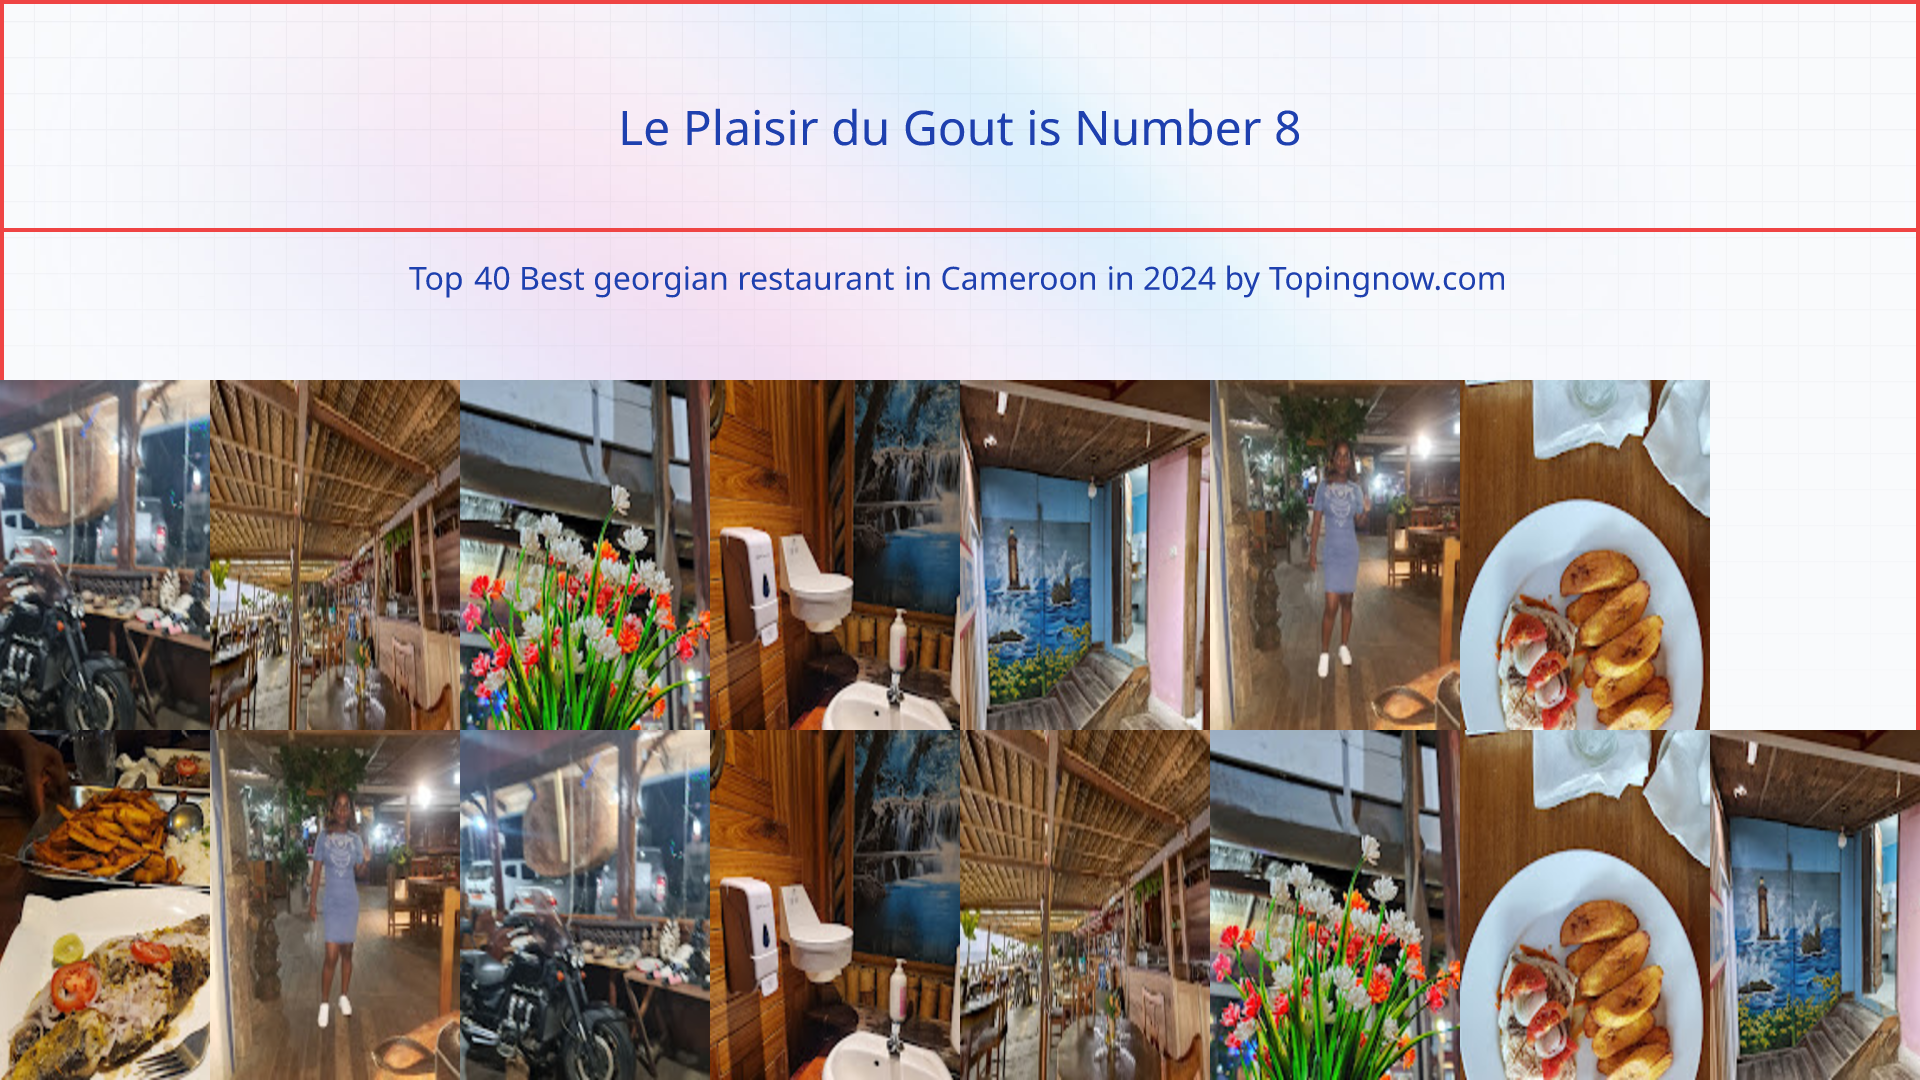 Le Plaisir du Gout: Top 40 Best georgian restaurant in Cameroon in 2024